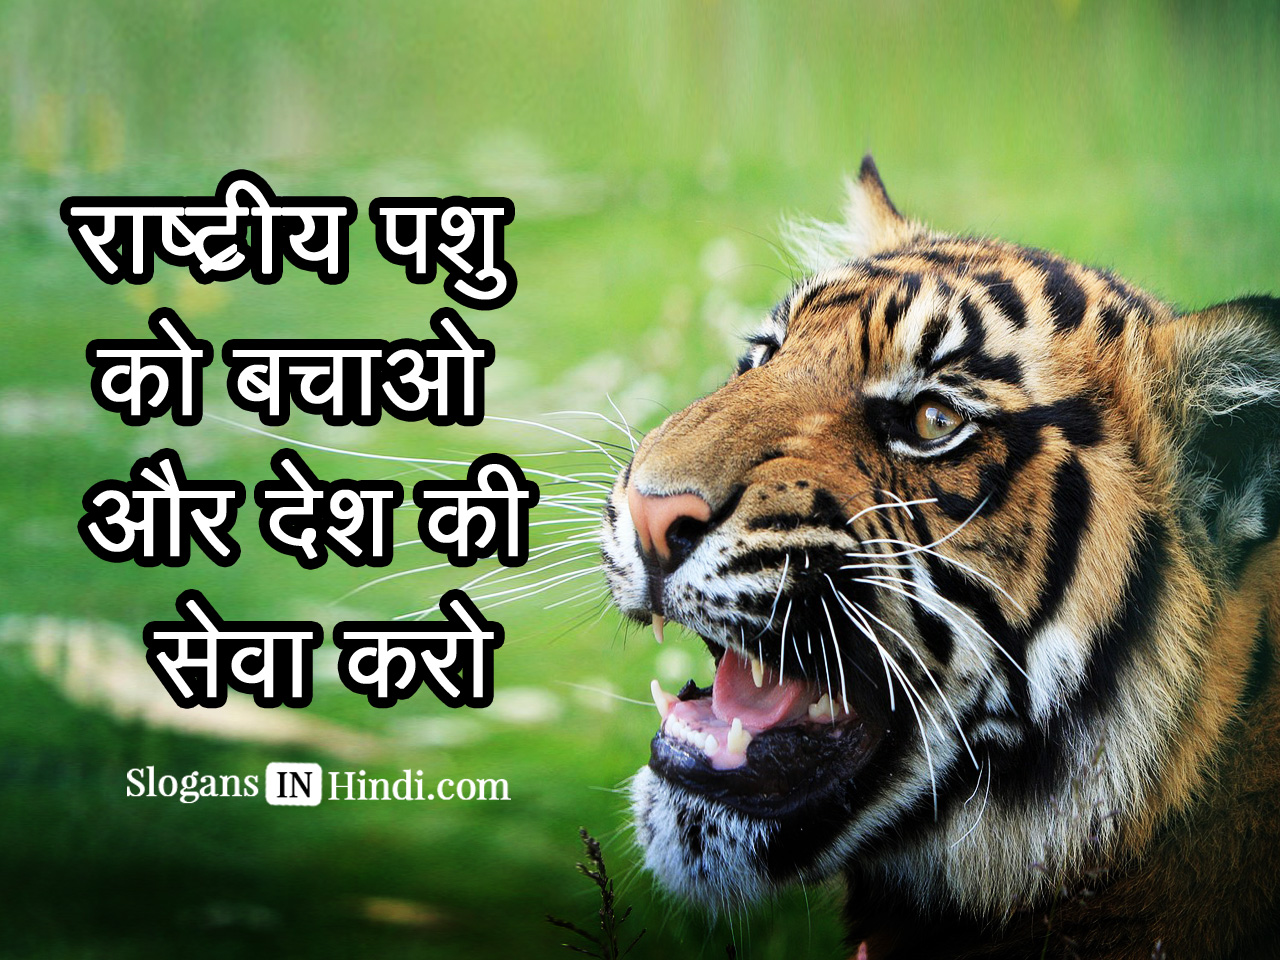 Save Tigers Slogans In Hindi